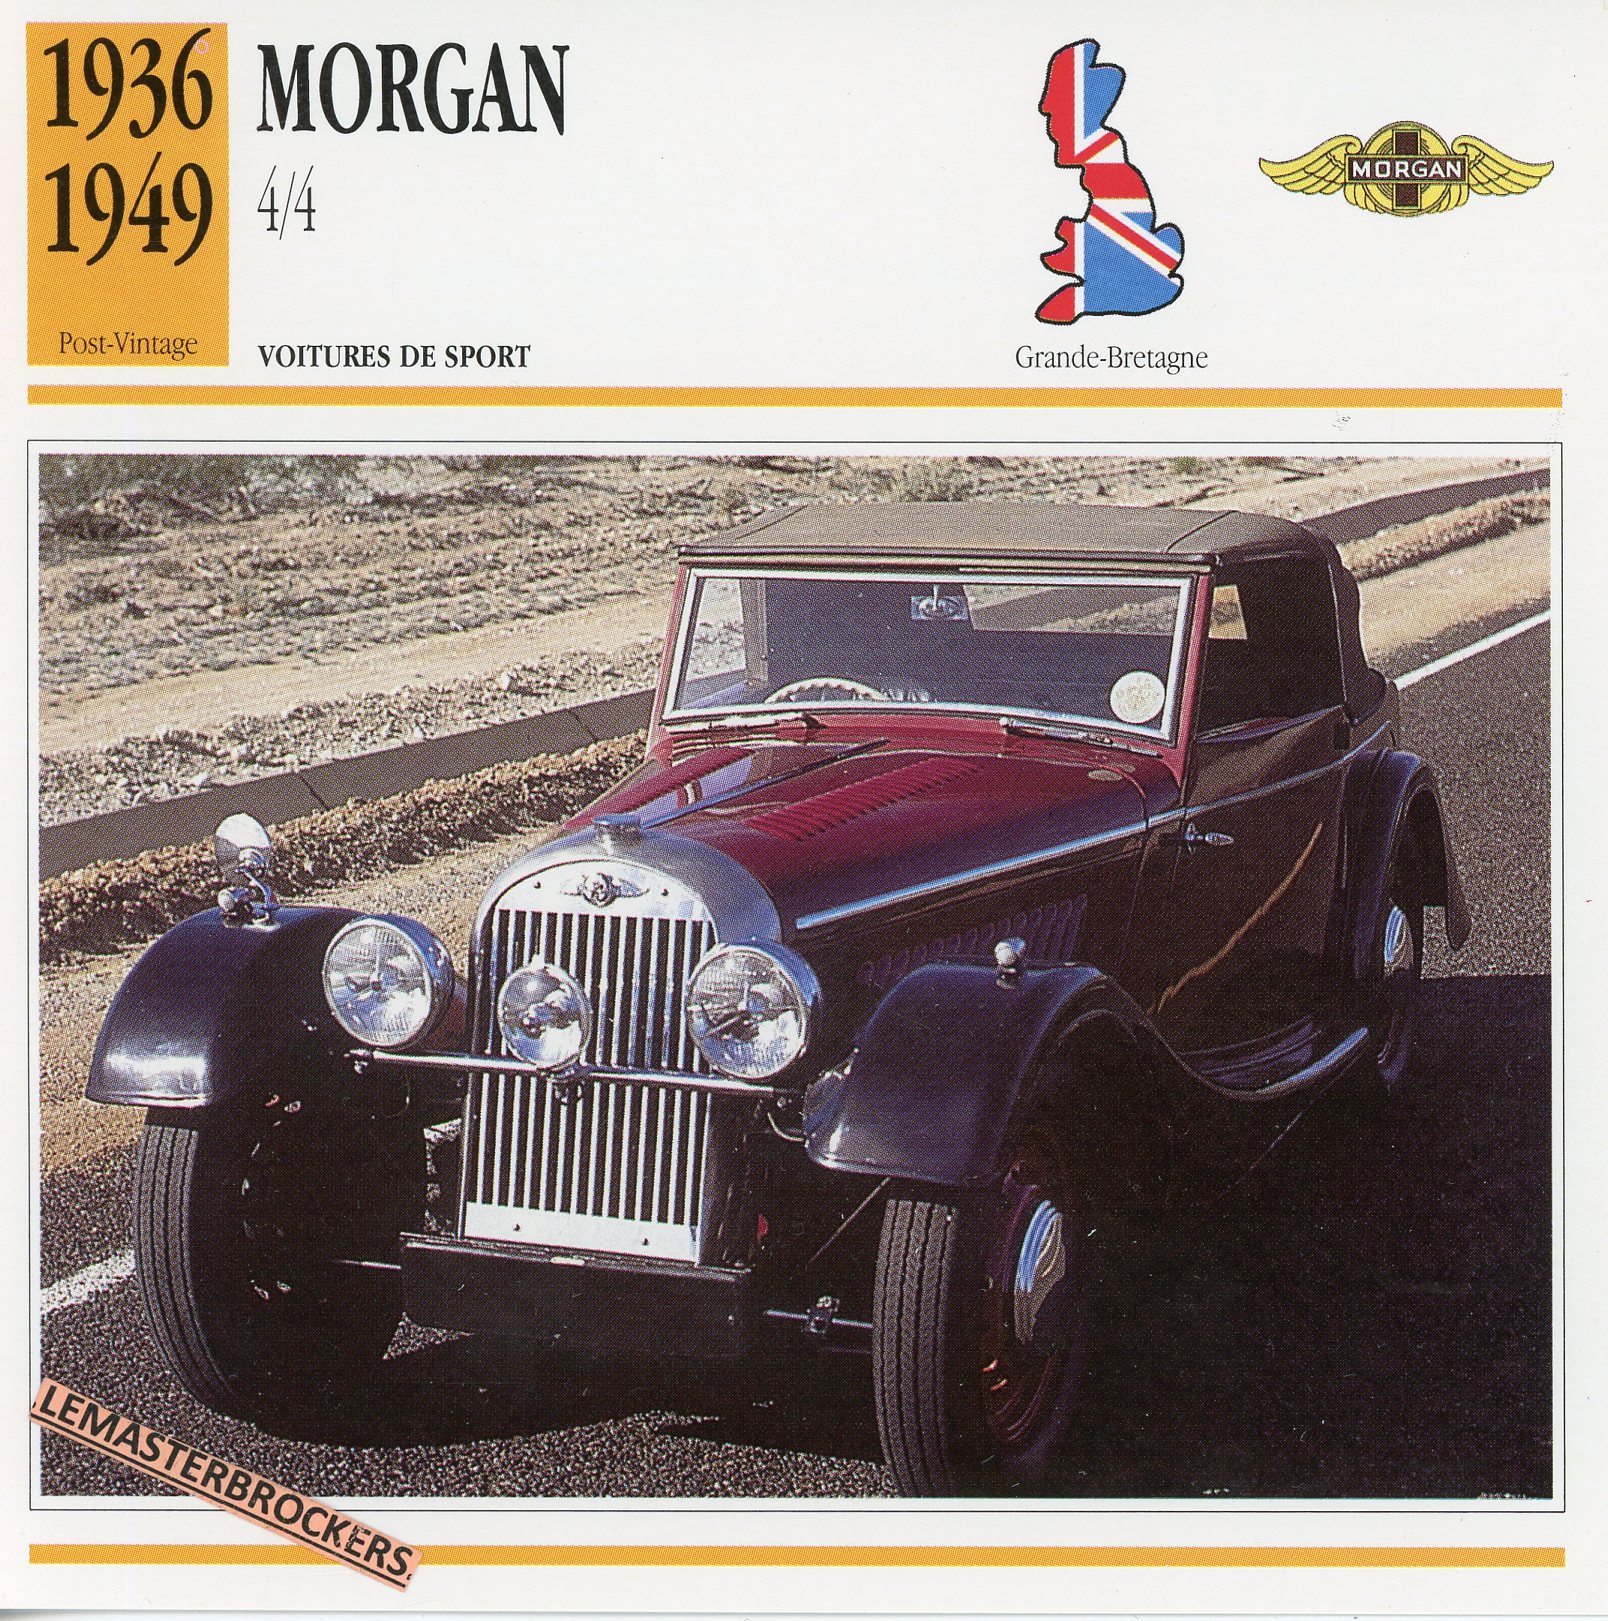 FICHE-MORGAN-4-4-1936-1944-LEMASTERBROCKERS-FICHE-AUTO-CARS-CARD-ATLAS-FRENCH